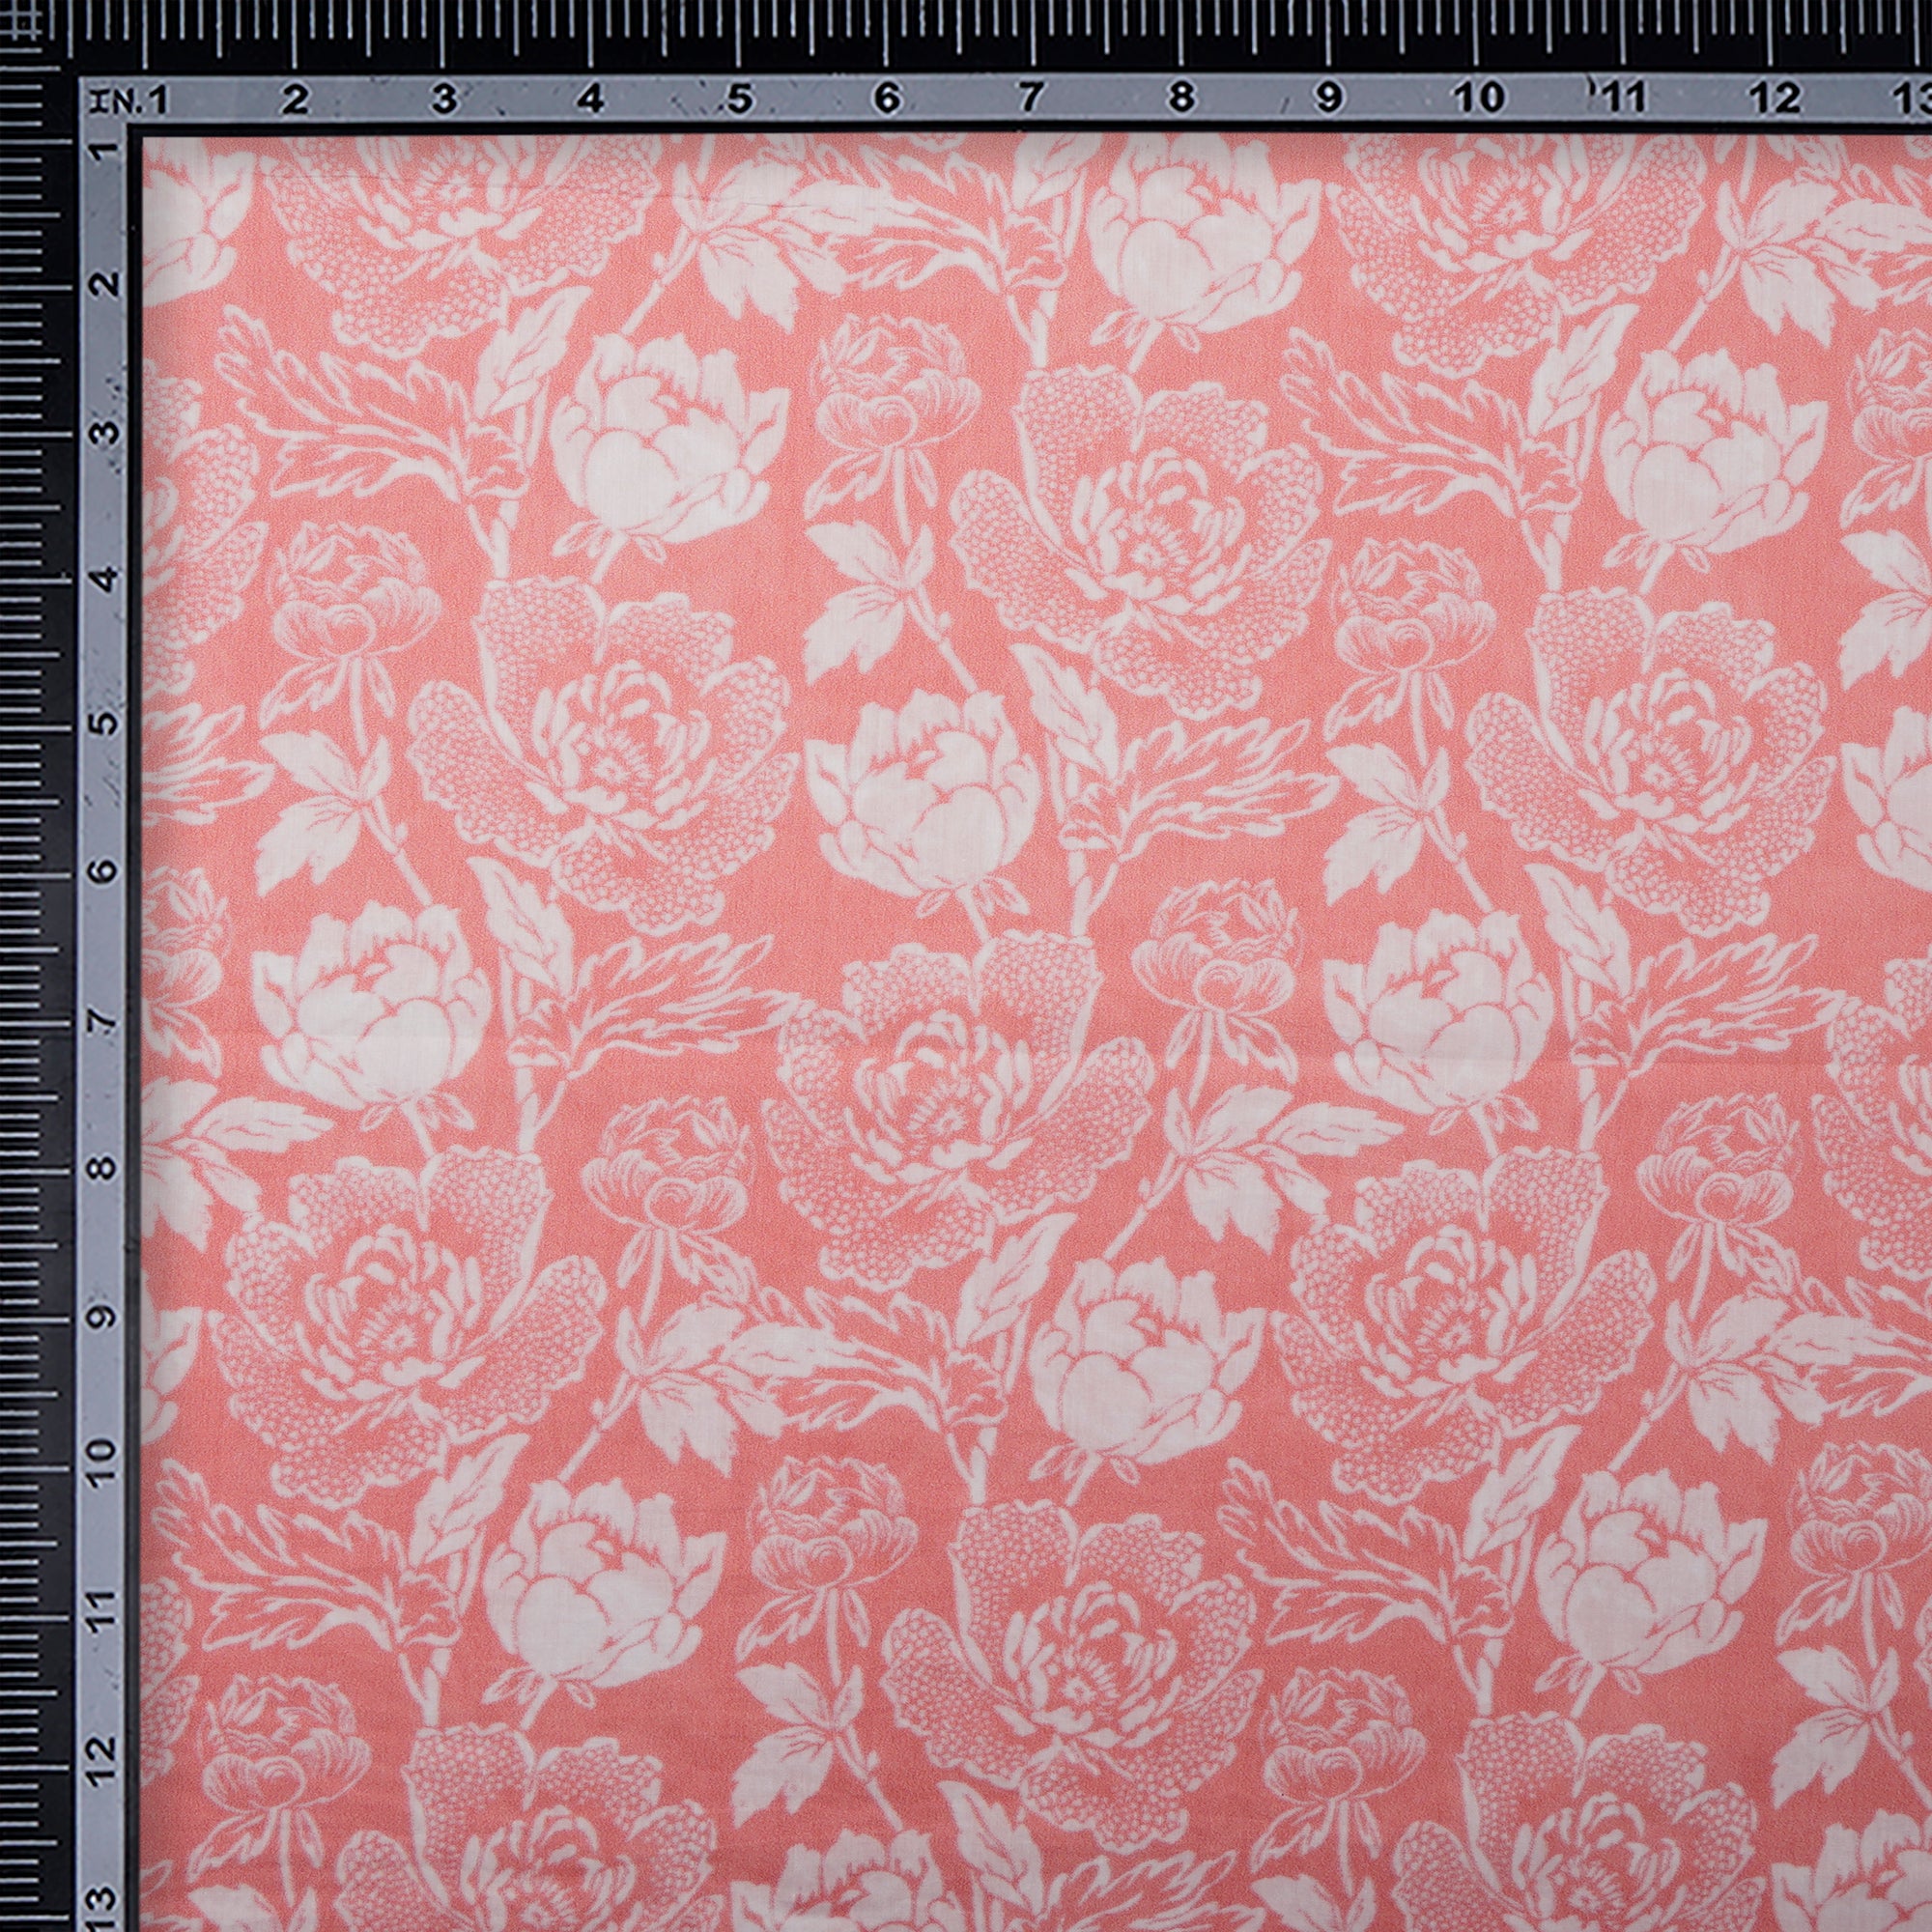 Peach-White Floral Pattern Digital Printed Cotton Lawn Fabric